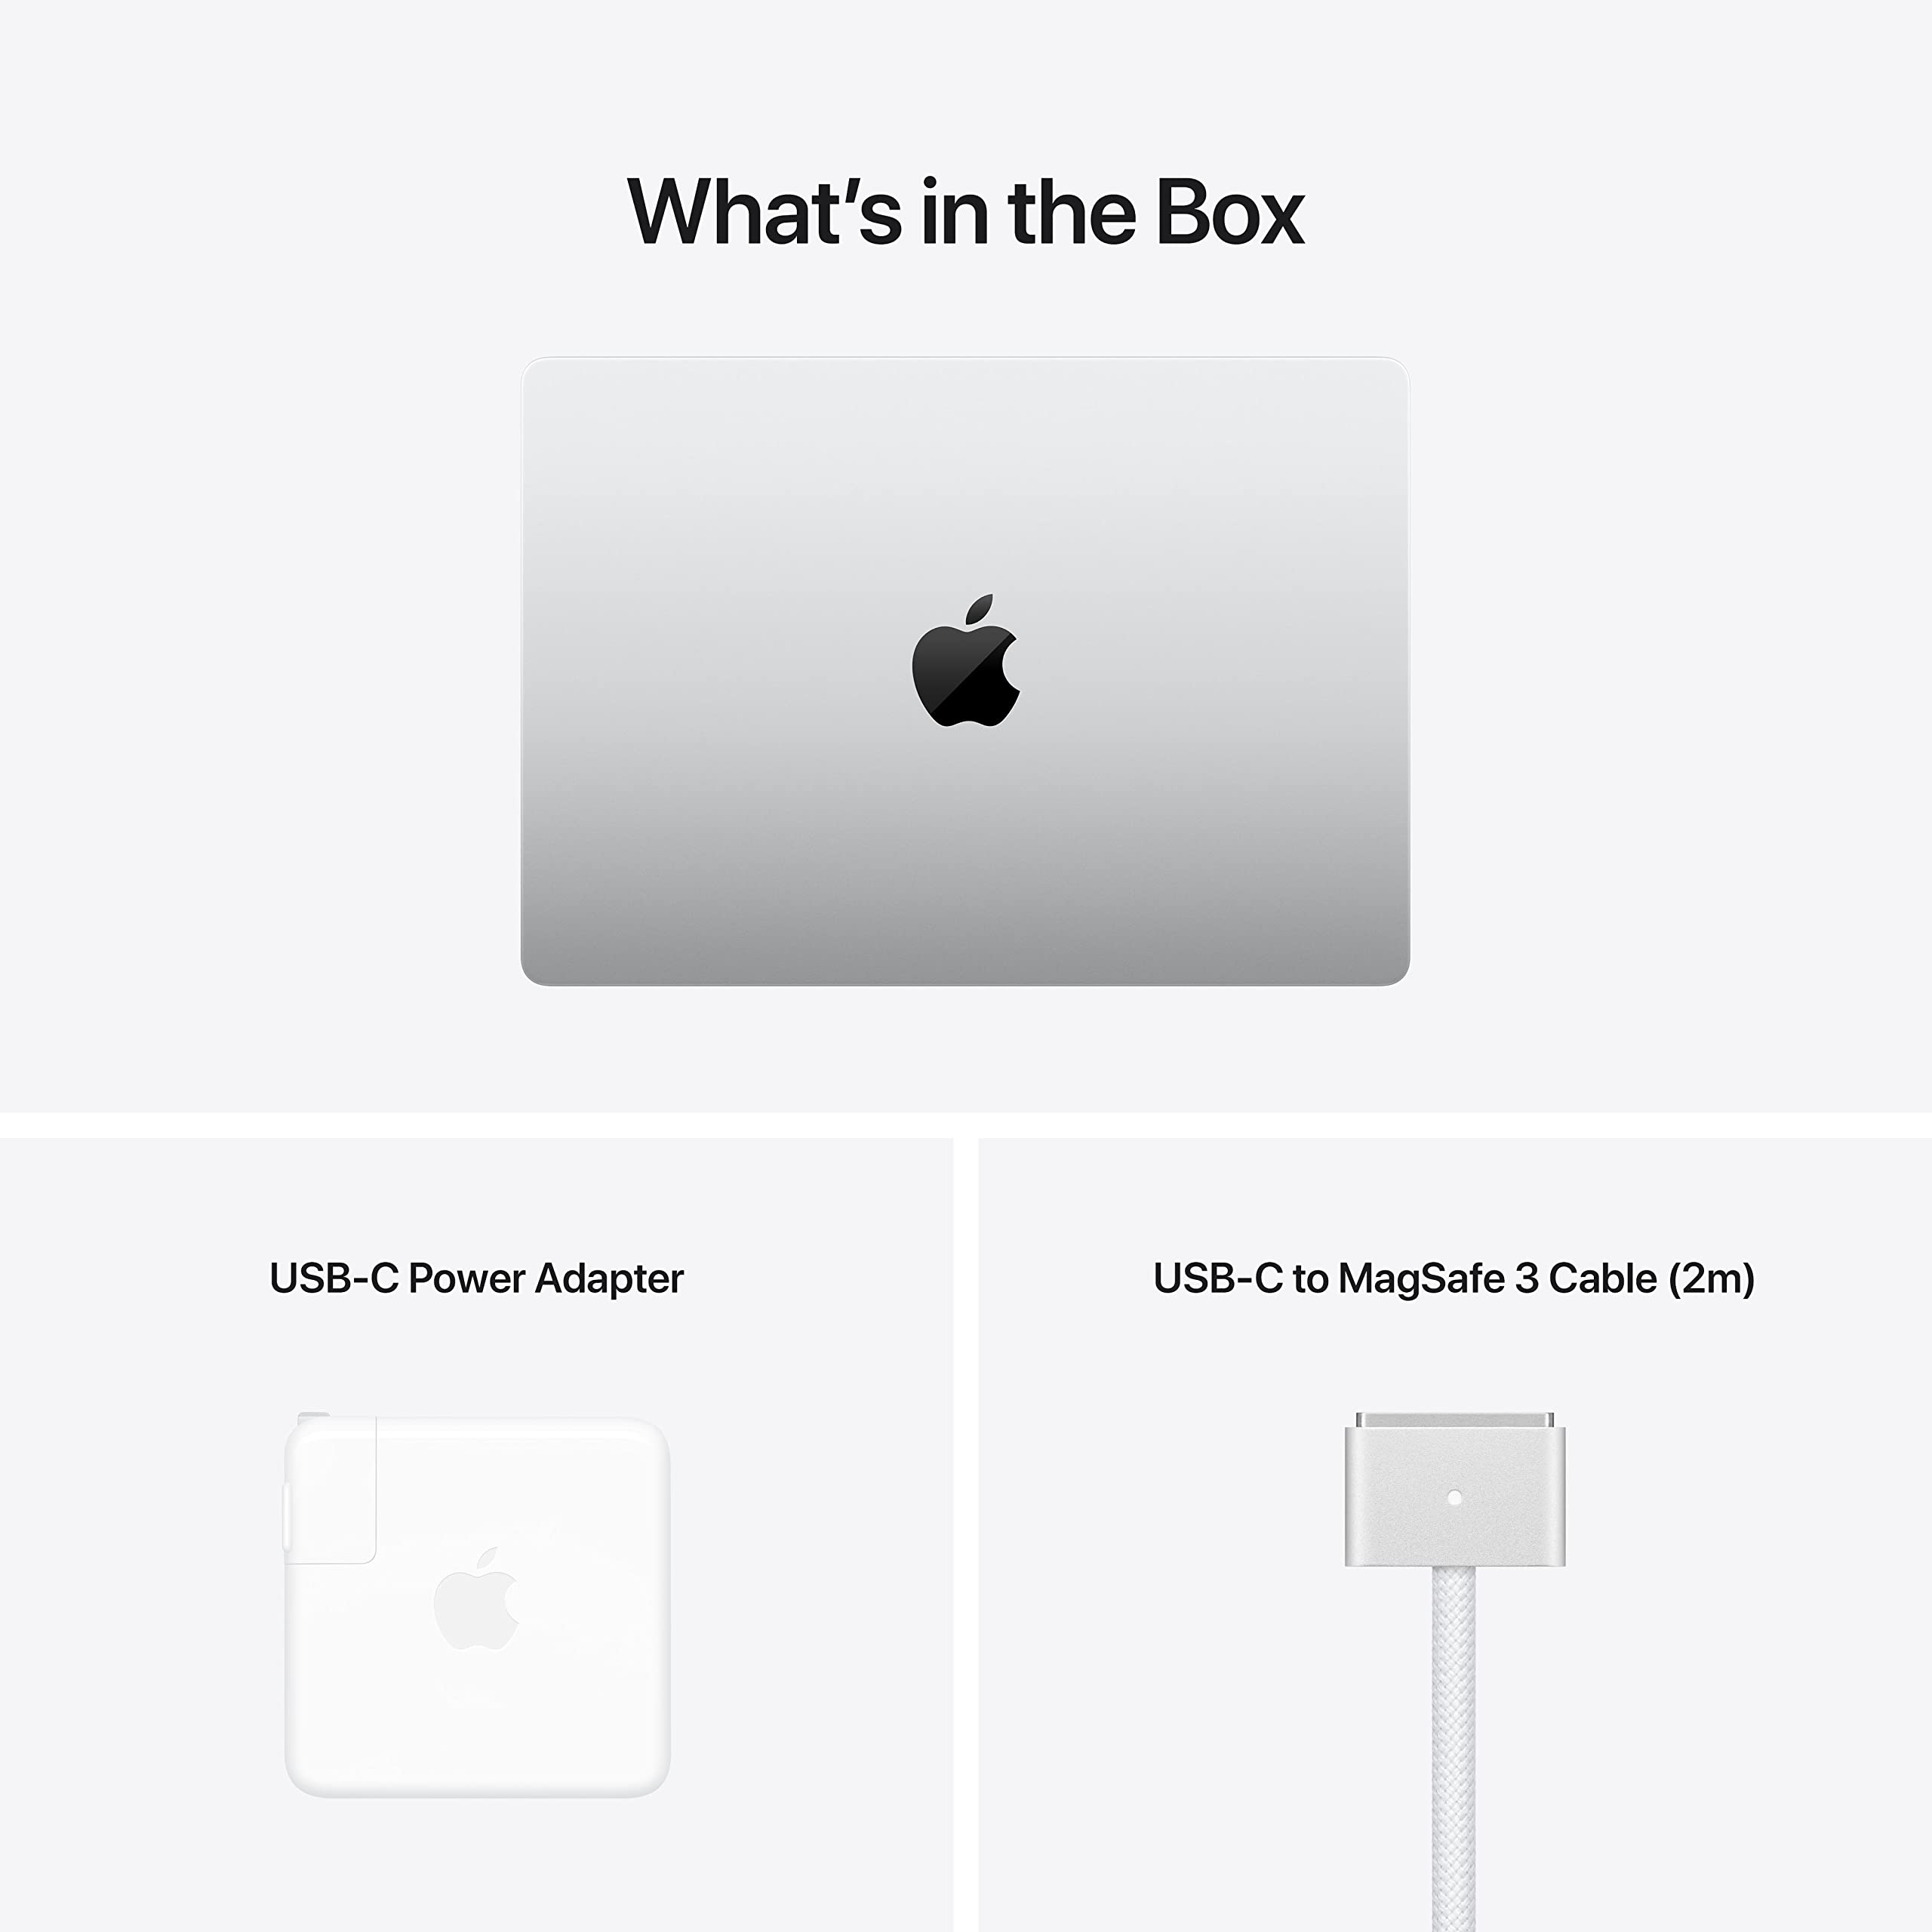 2021 Apple MacBook Pro (14-inch, Apple M1 Pro chip with 10‑core CPU and 16‑core GPU, 16GB RAM, 1TB SSD) - Silver